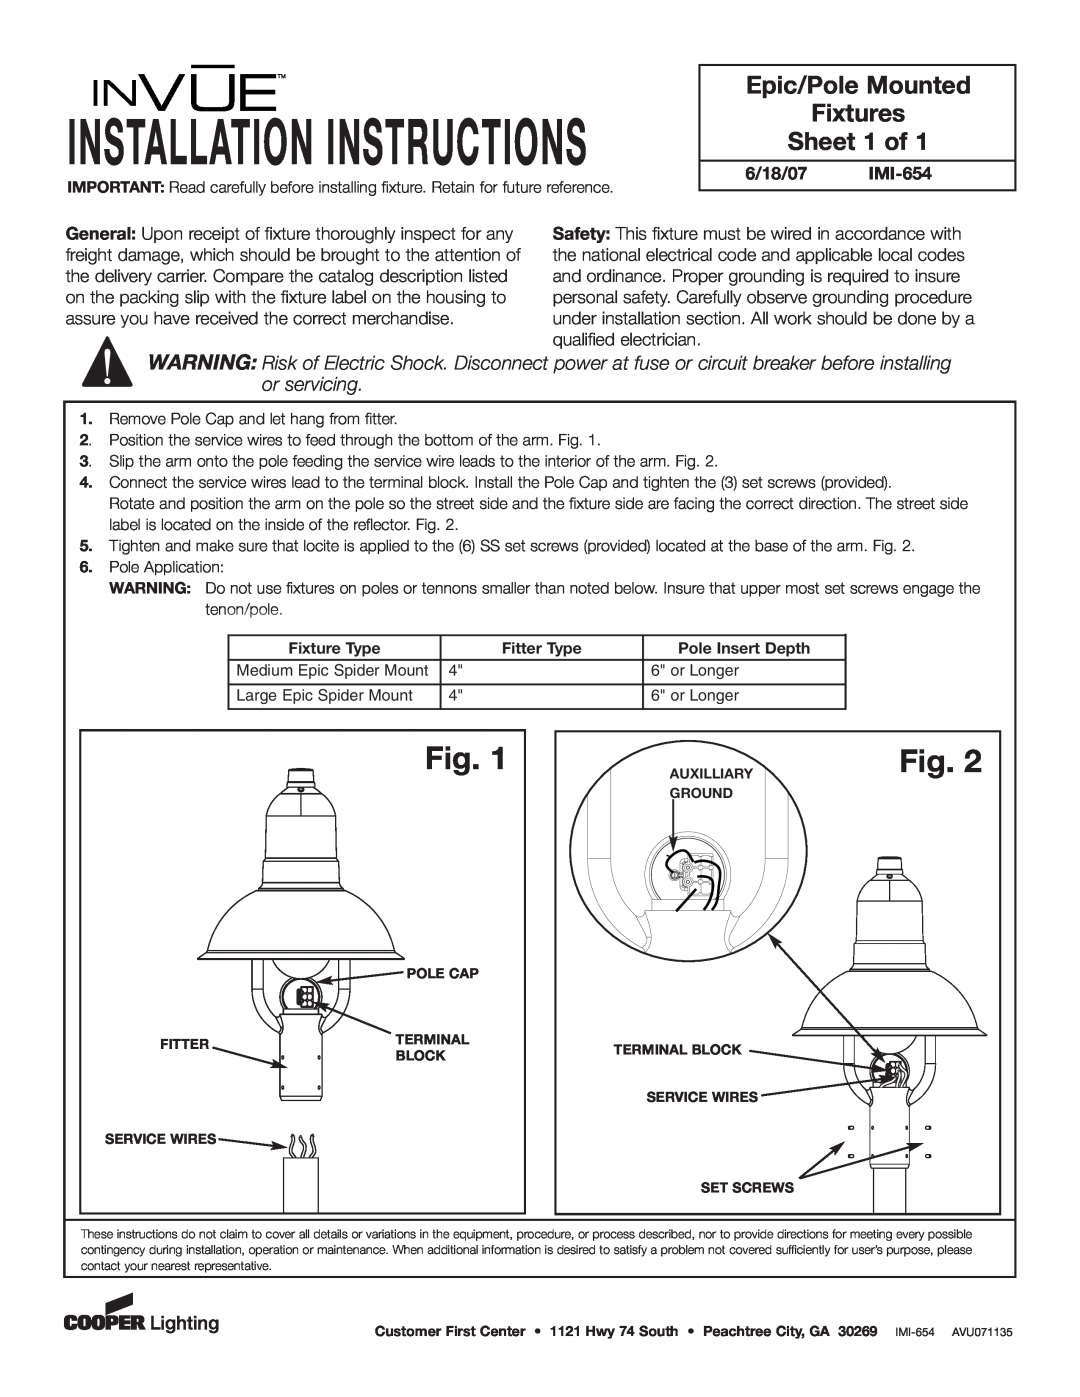 Cooper Lighting IMI-654 installation instructions Installation Instructions, Epic/Pole Mounted Fixtures Sheet 1 of 